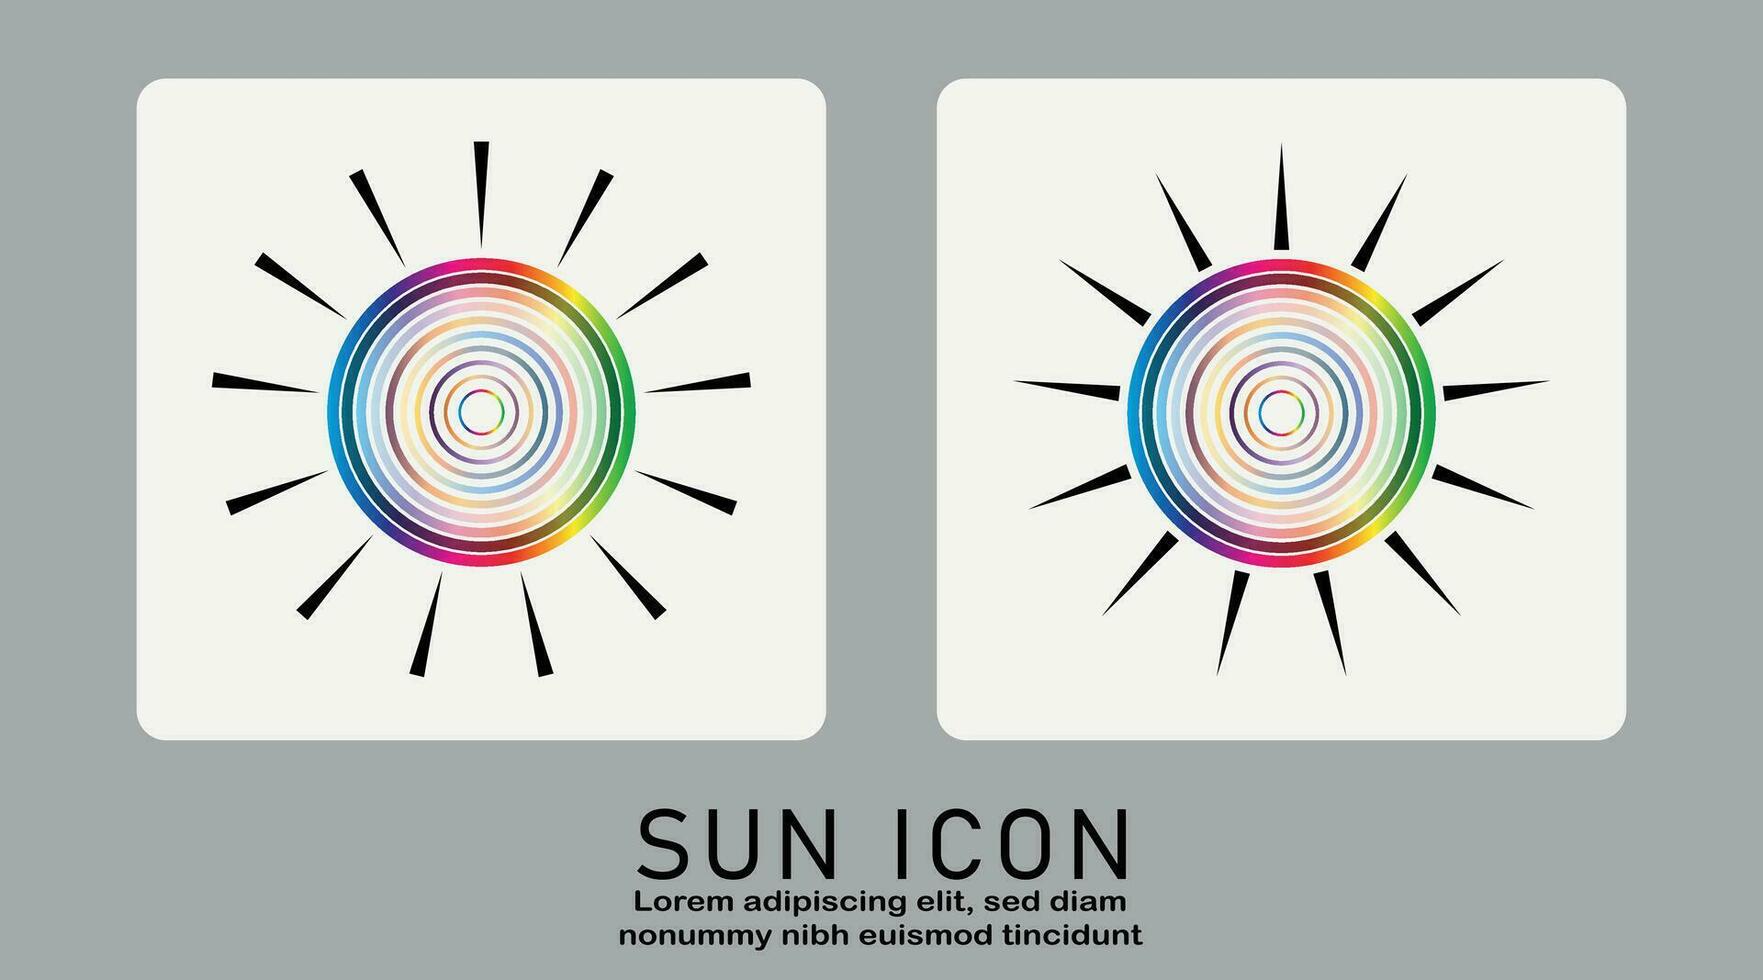 Sunrise or sunset icon, sun icon vector isolated on white background.